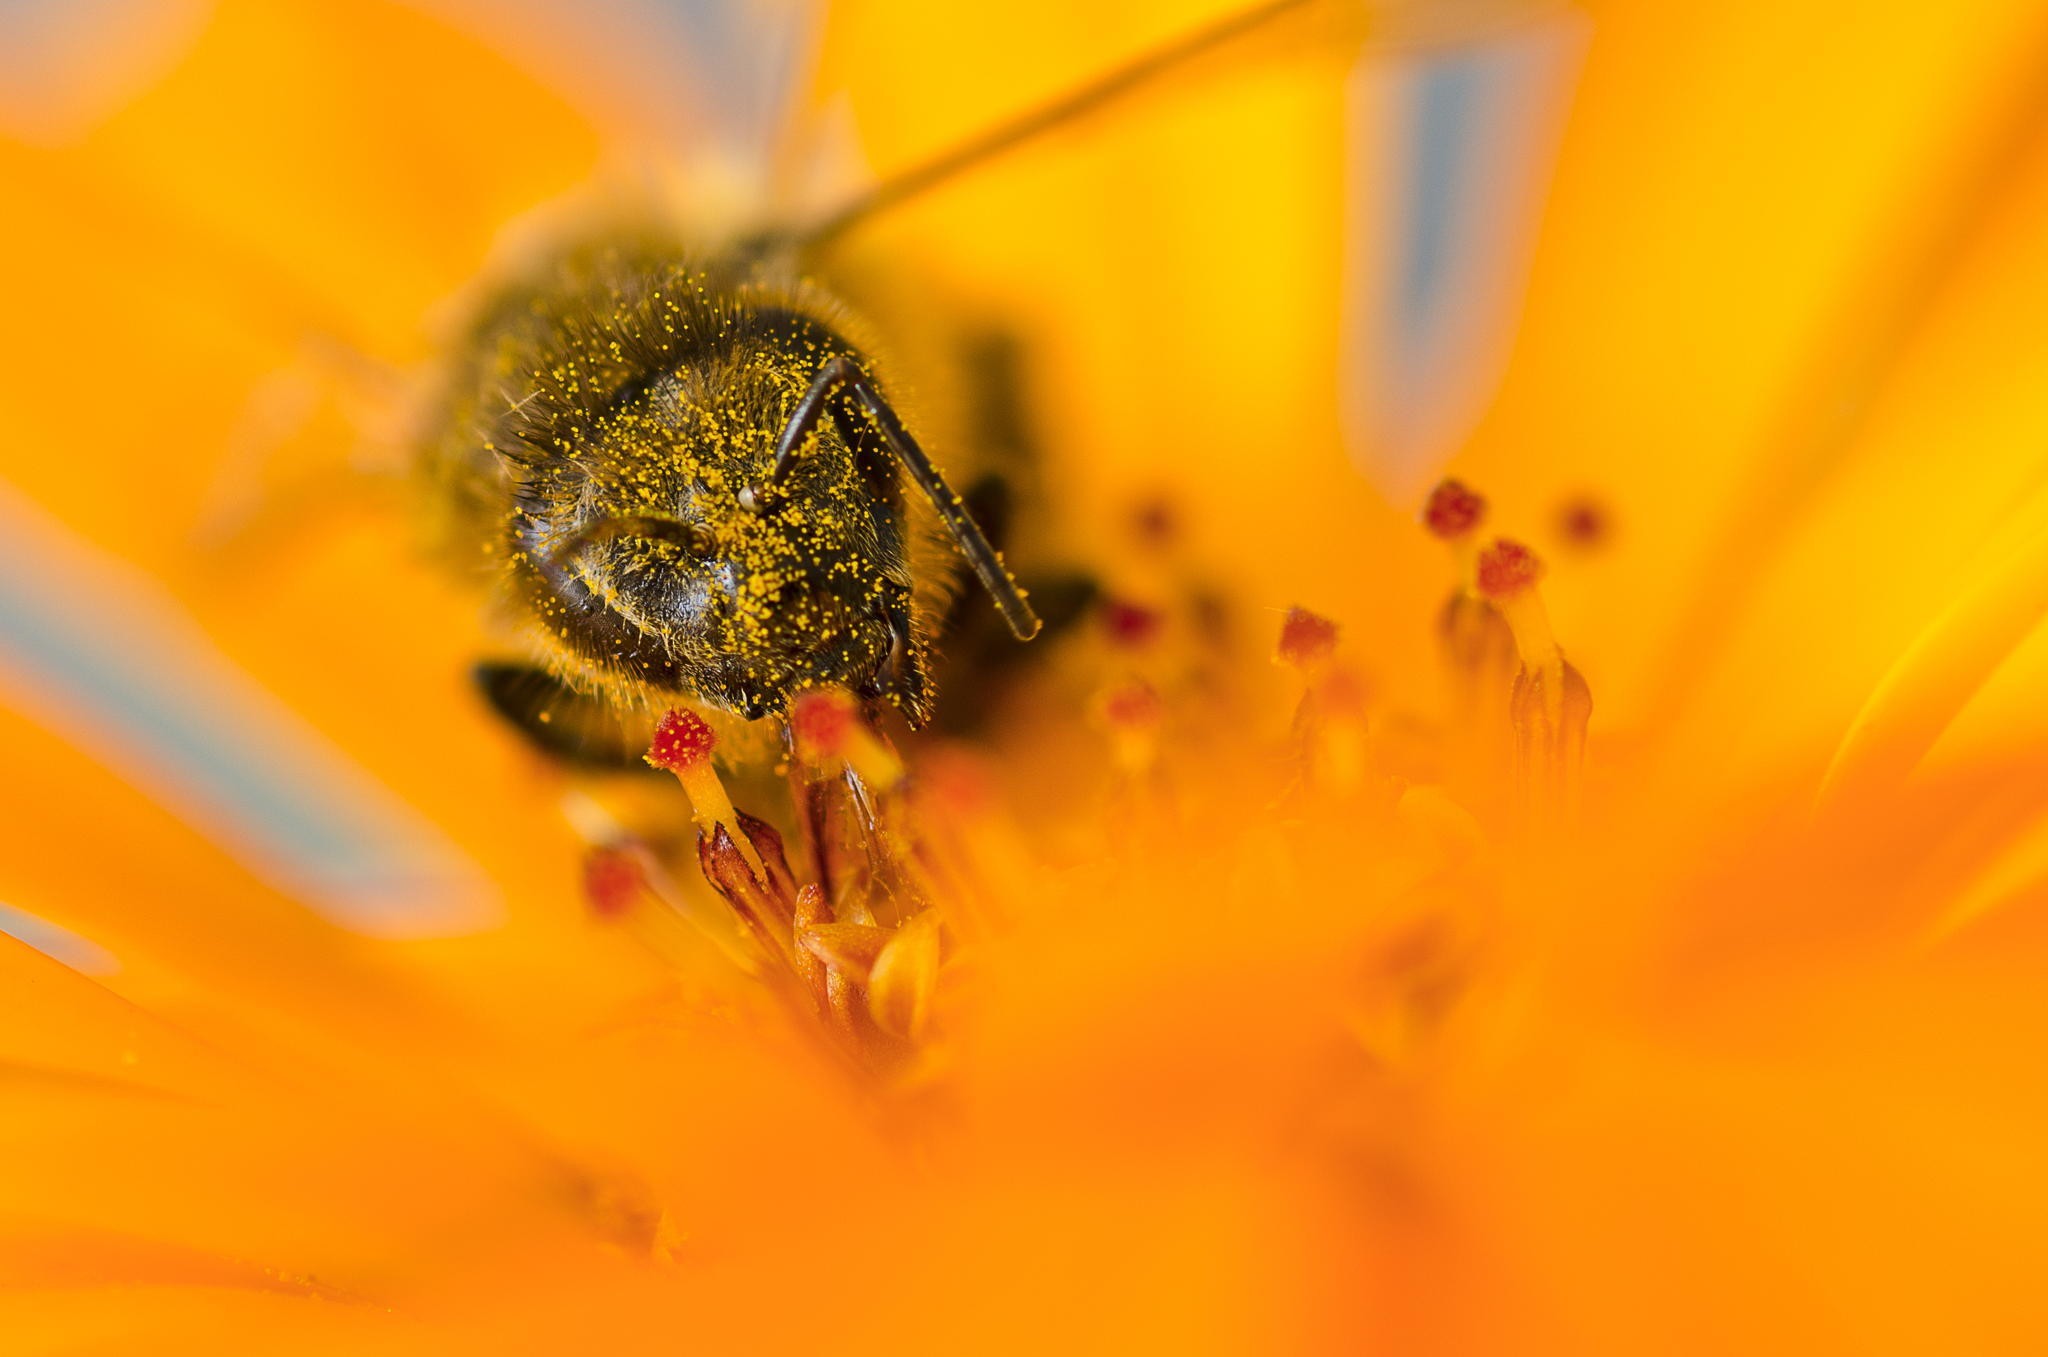 General 2048x1357 macro insect pollen bees flowers yellow flowers yellow orange animals plants